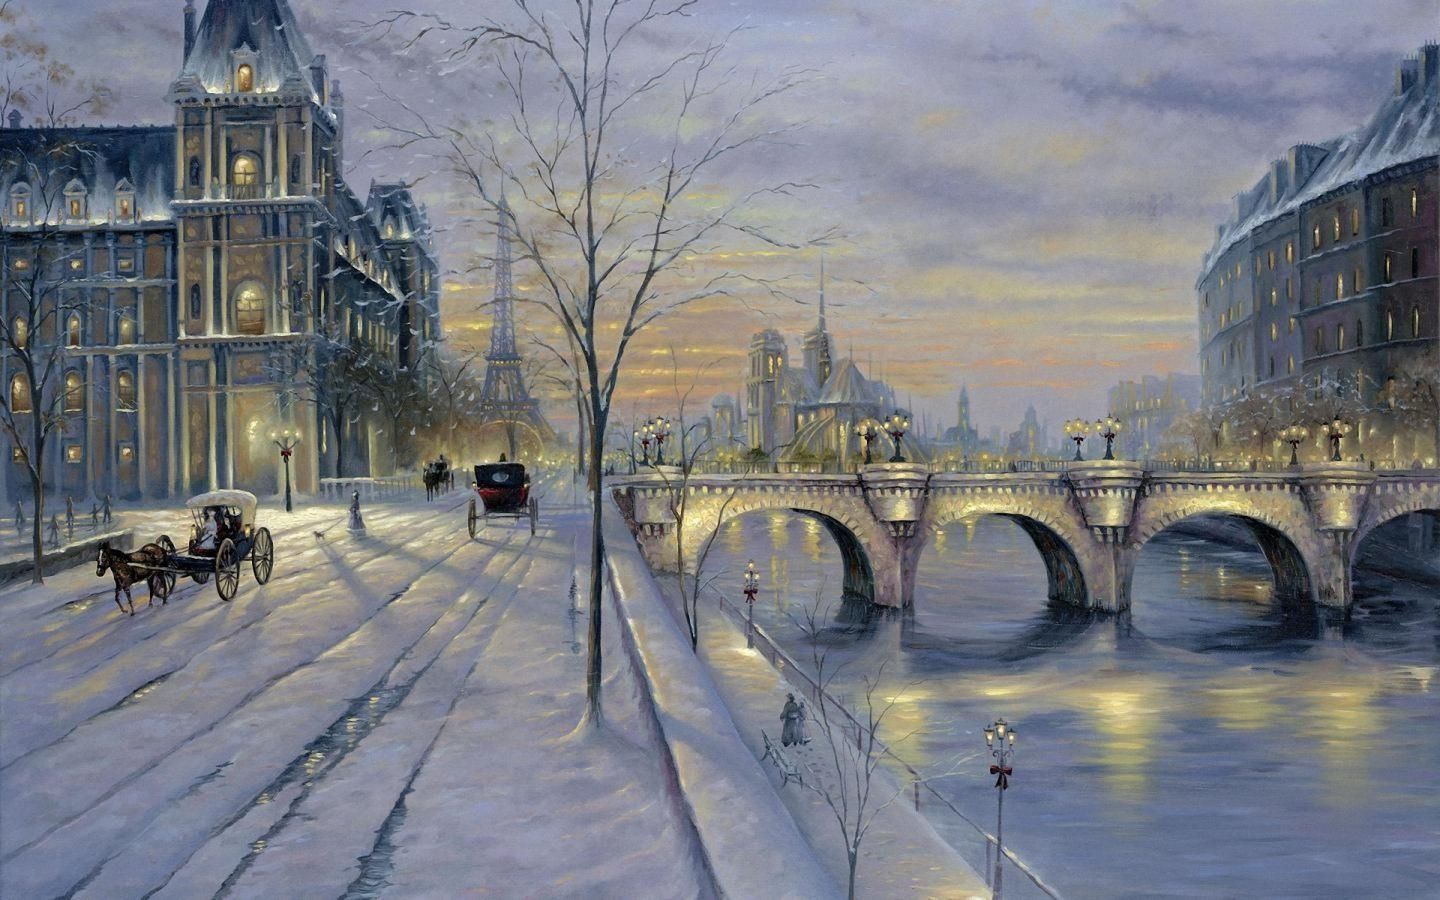 Christmas in Paris Wallpaper. Paris winter in france 1440x900 Wallpaper, Paris 1440x900 Wallpaper. Paris winter, Winter painting, Winter landscape